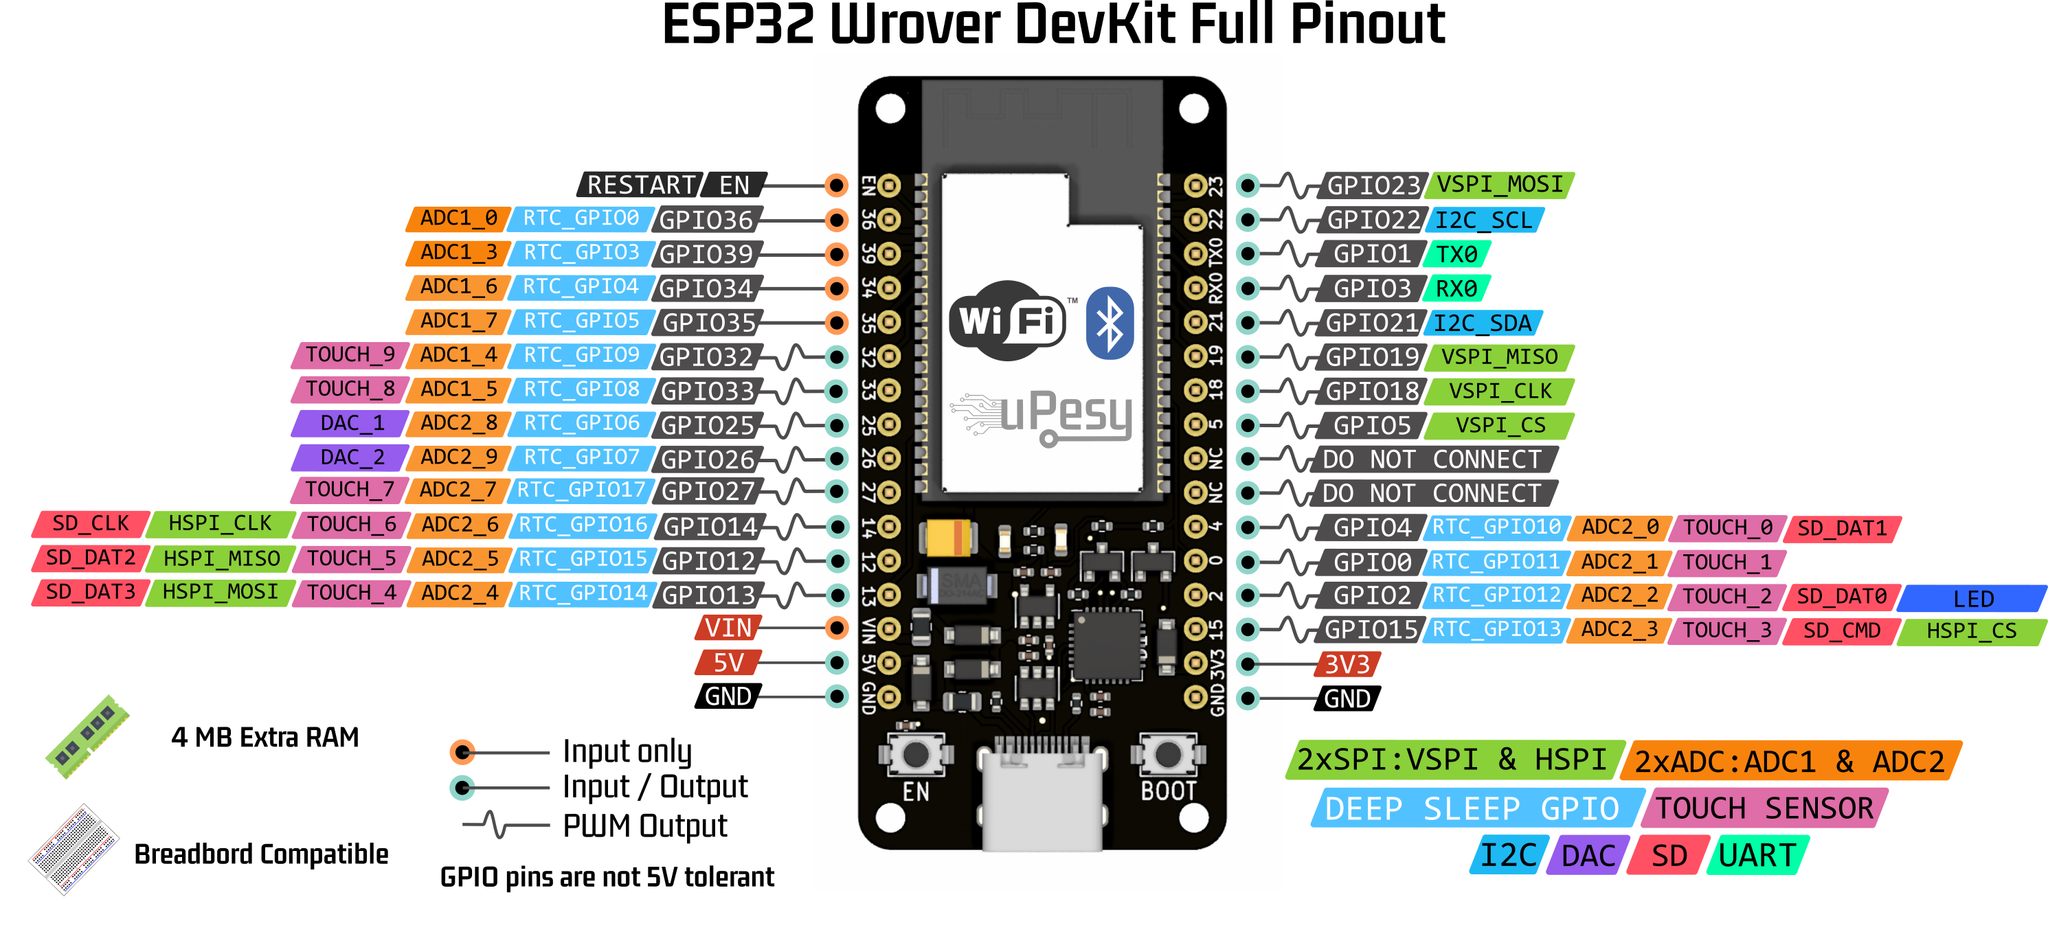 Esp32 libraries. Esp32 WROVER. Esp32 30 Pin. Esp32 GPIO Pins. Esp32-WROVER-E pinout.